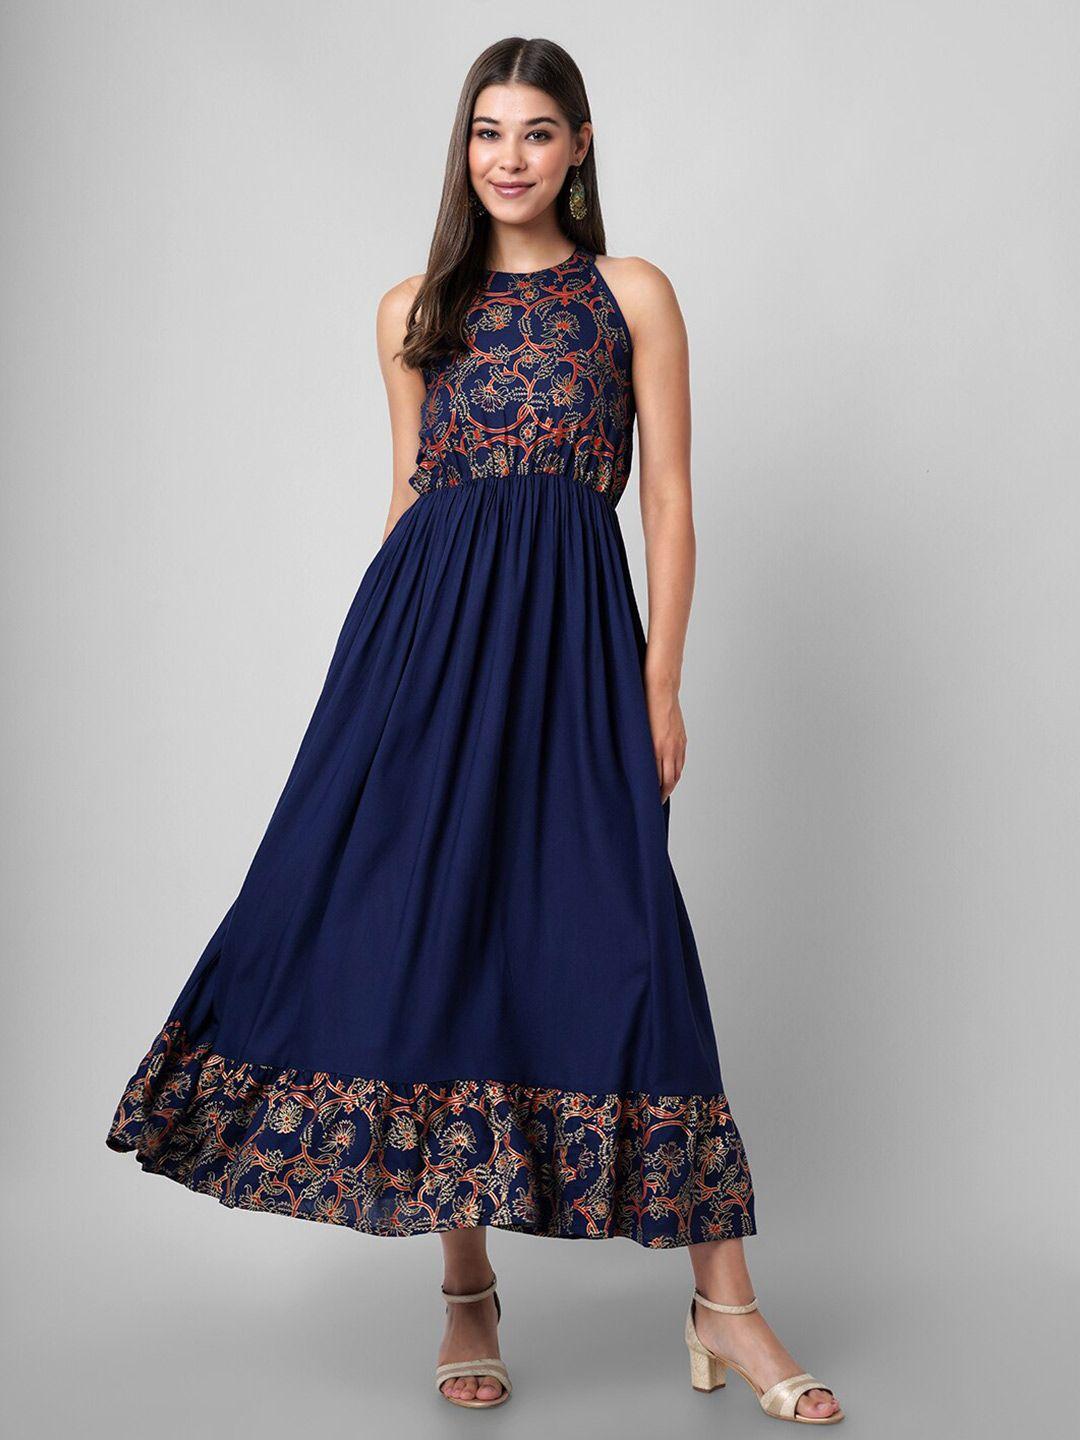 purshottam wala blue floral maxi dress